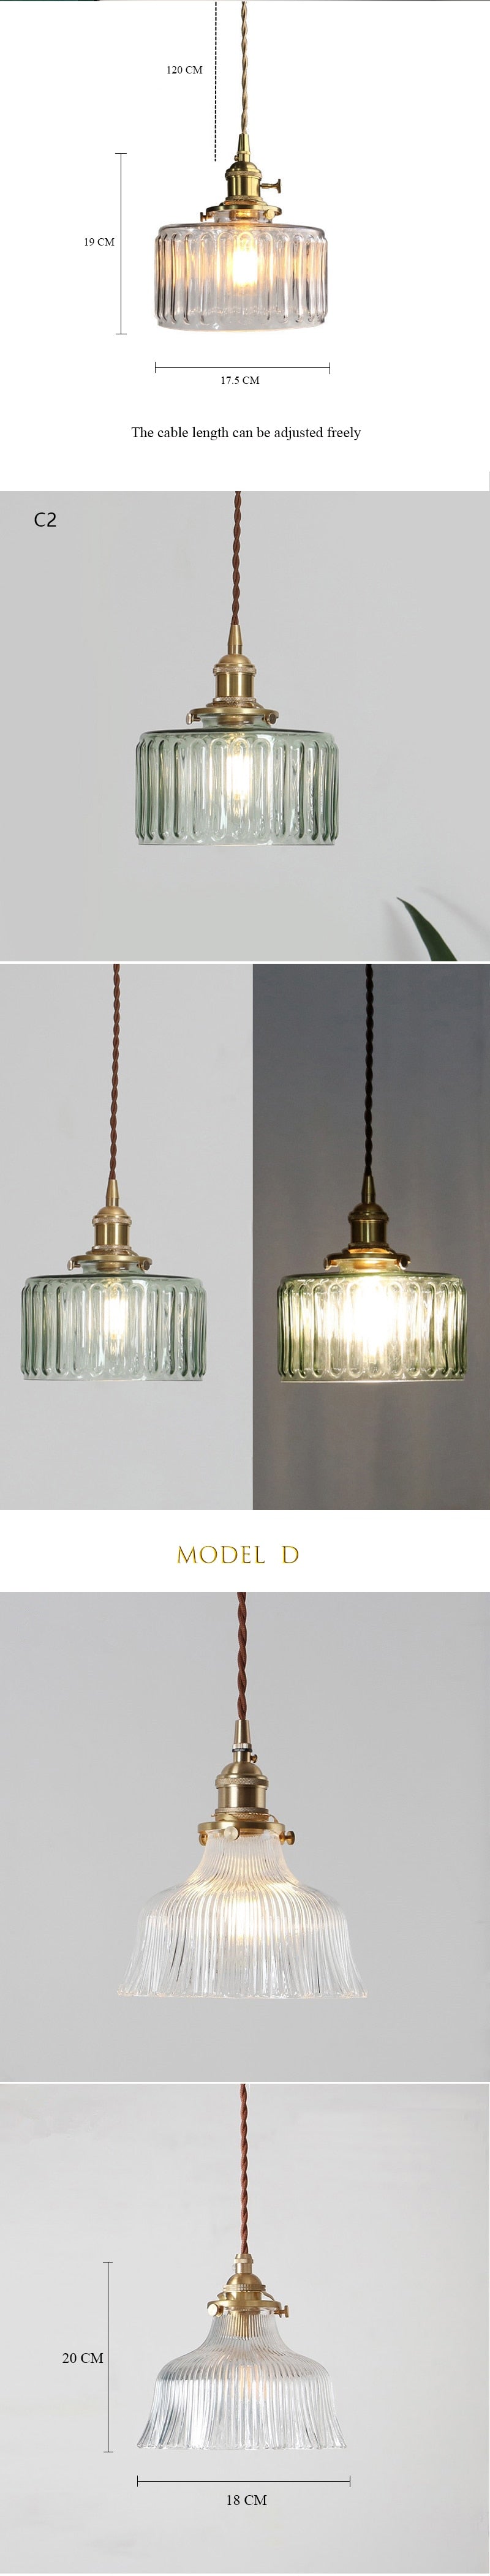 Lampe Led suspendue en verre au Design moderne – L'Atelier Imbert